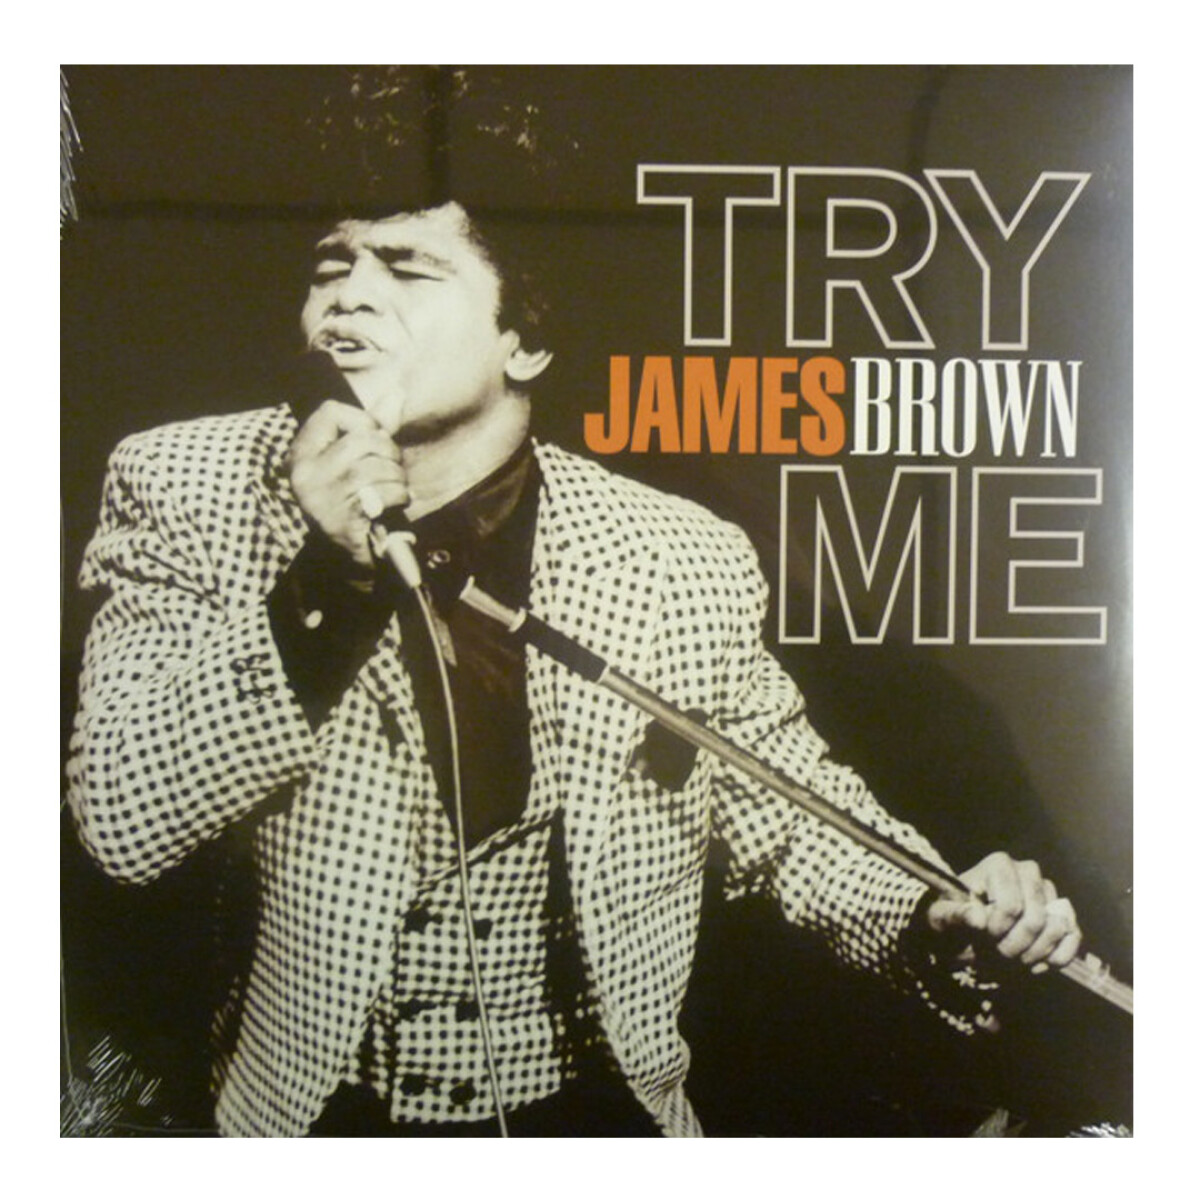 Brown, James - Try Me - Vinilo 